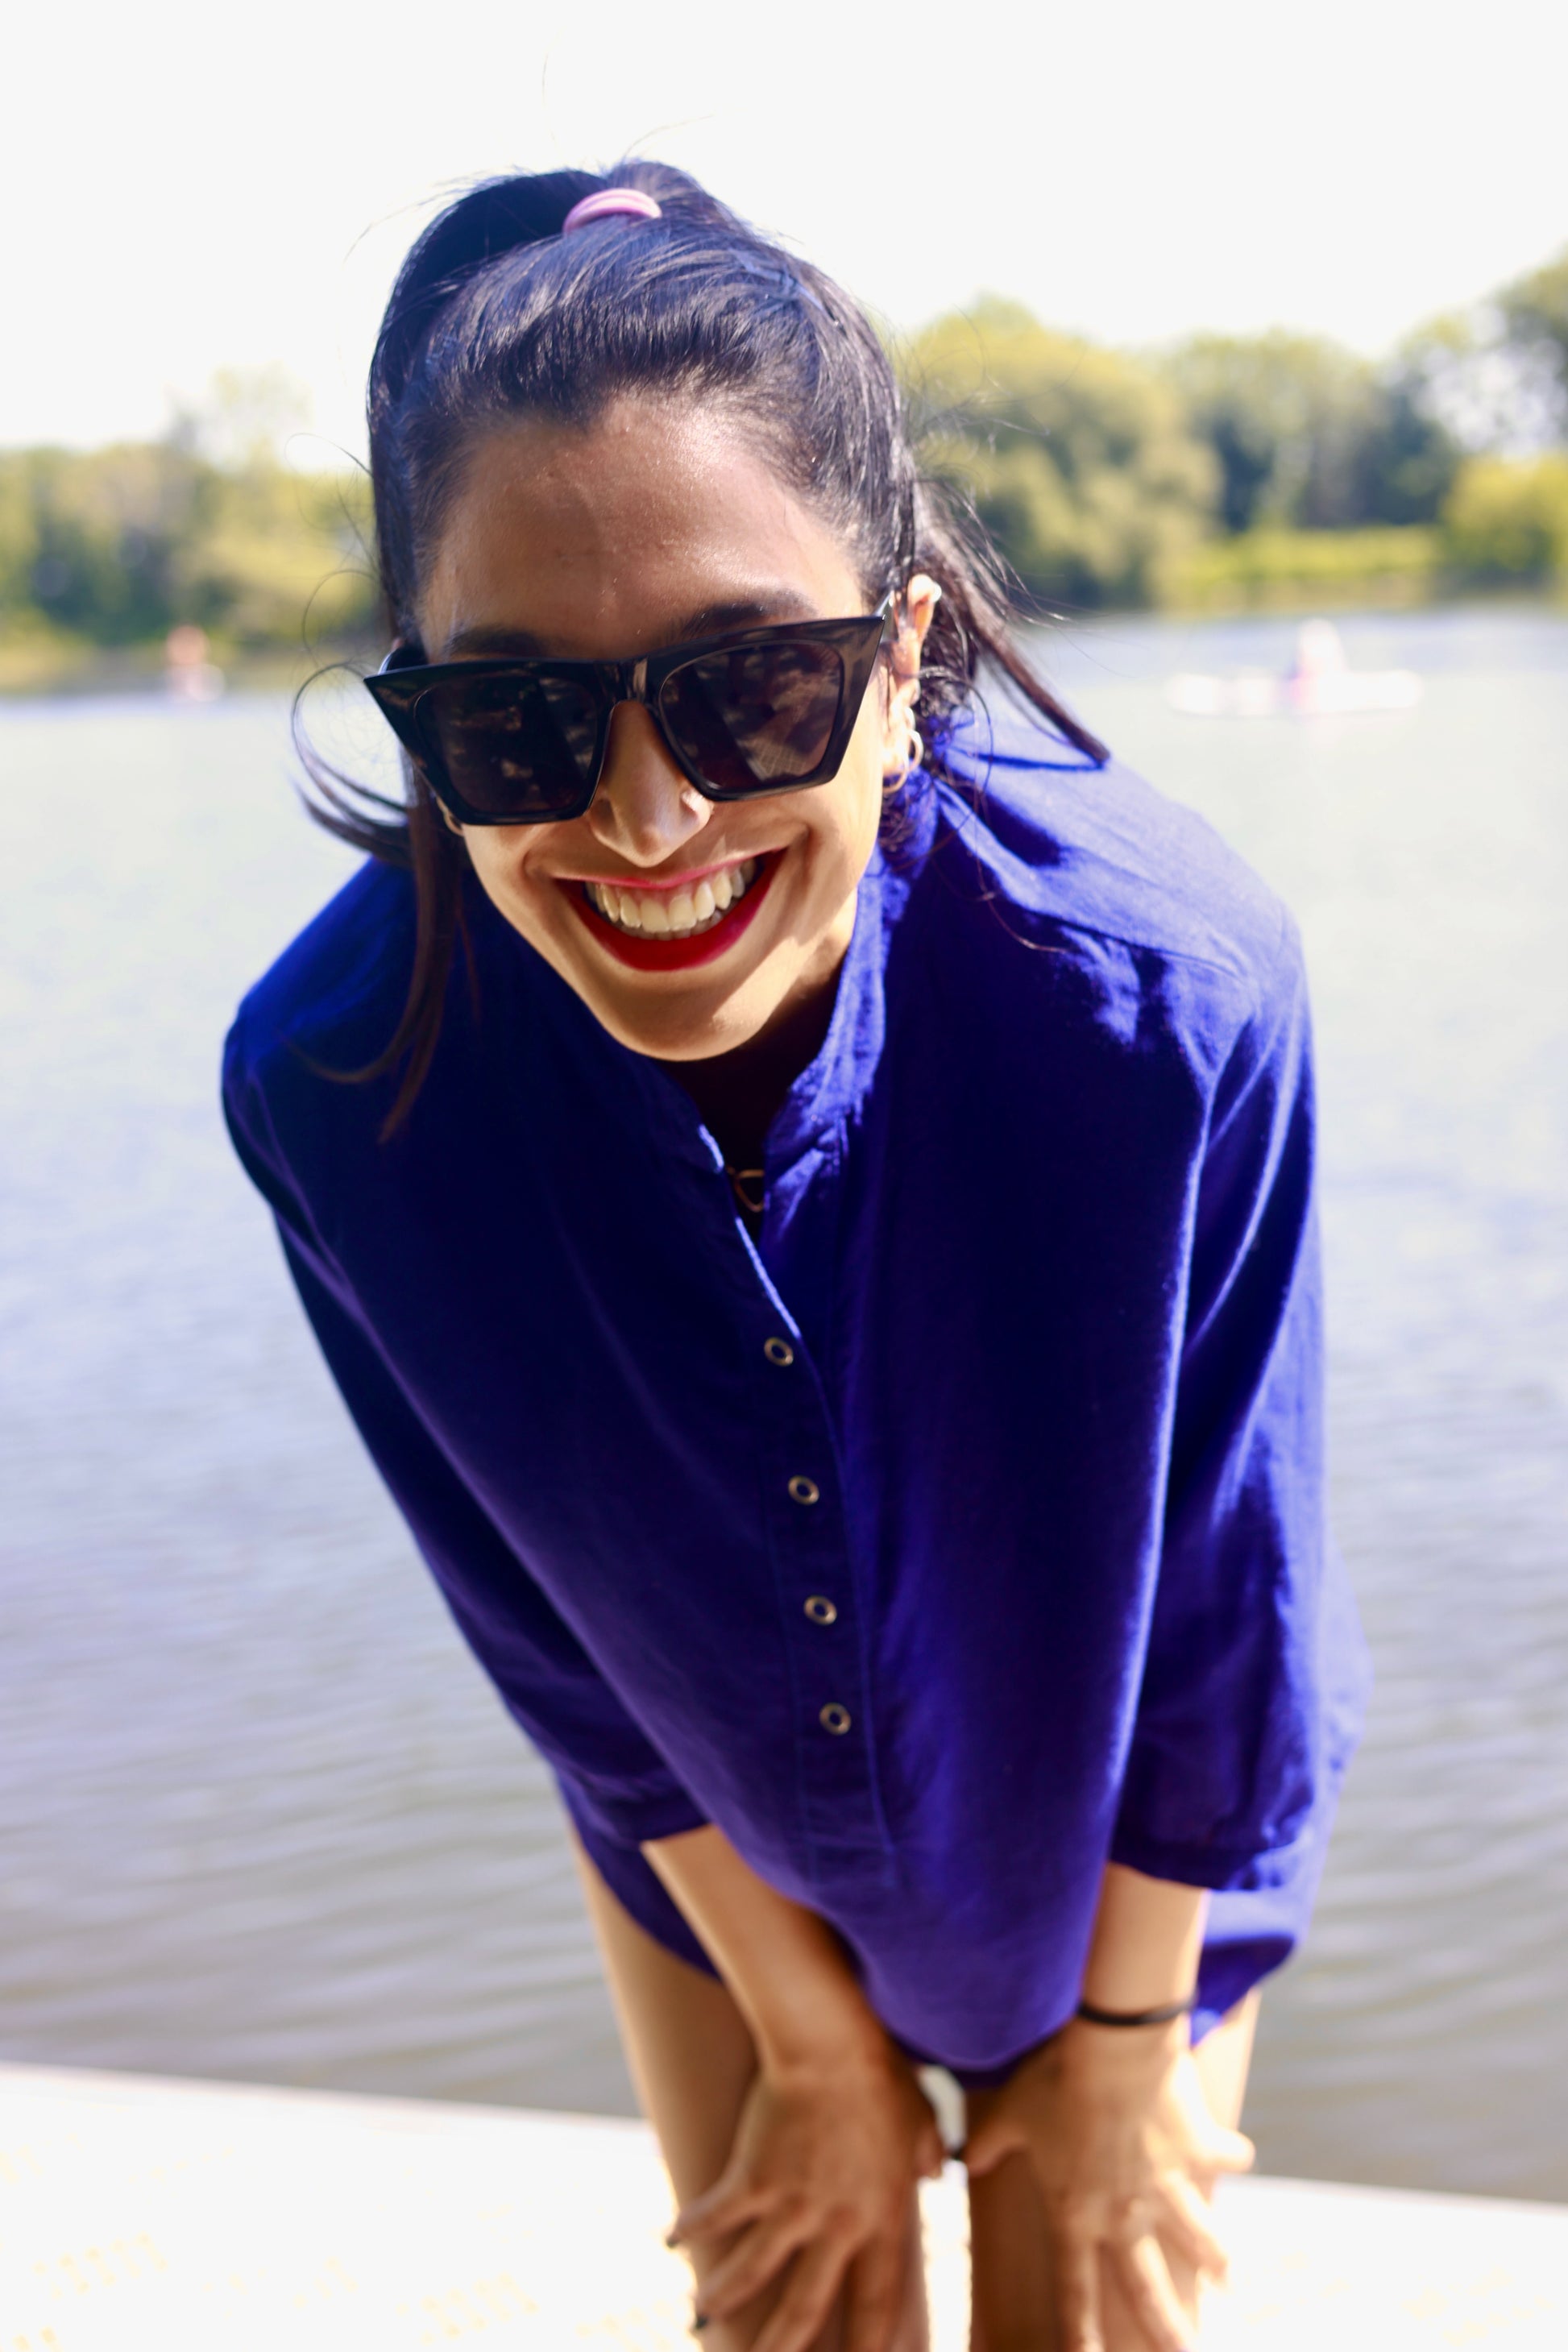 Sanaz Firouzi Wears the Blue Linen Blouse from ELZI.ca on a warm sunny day.